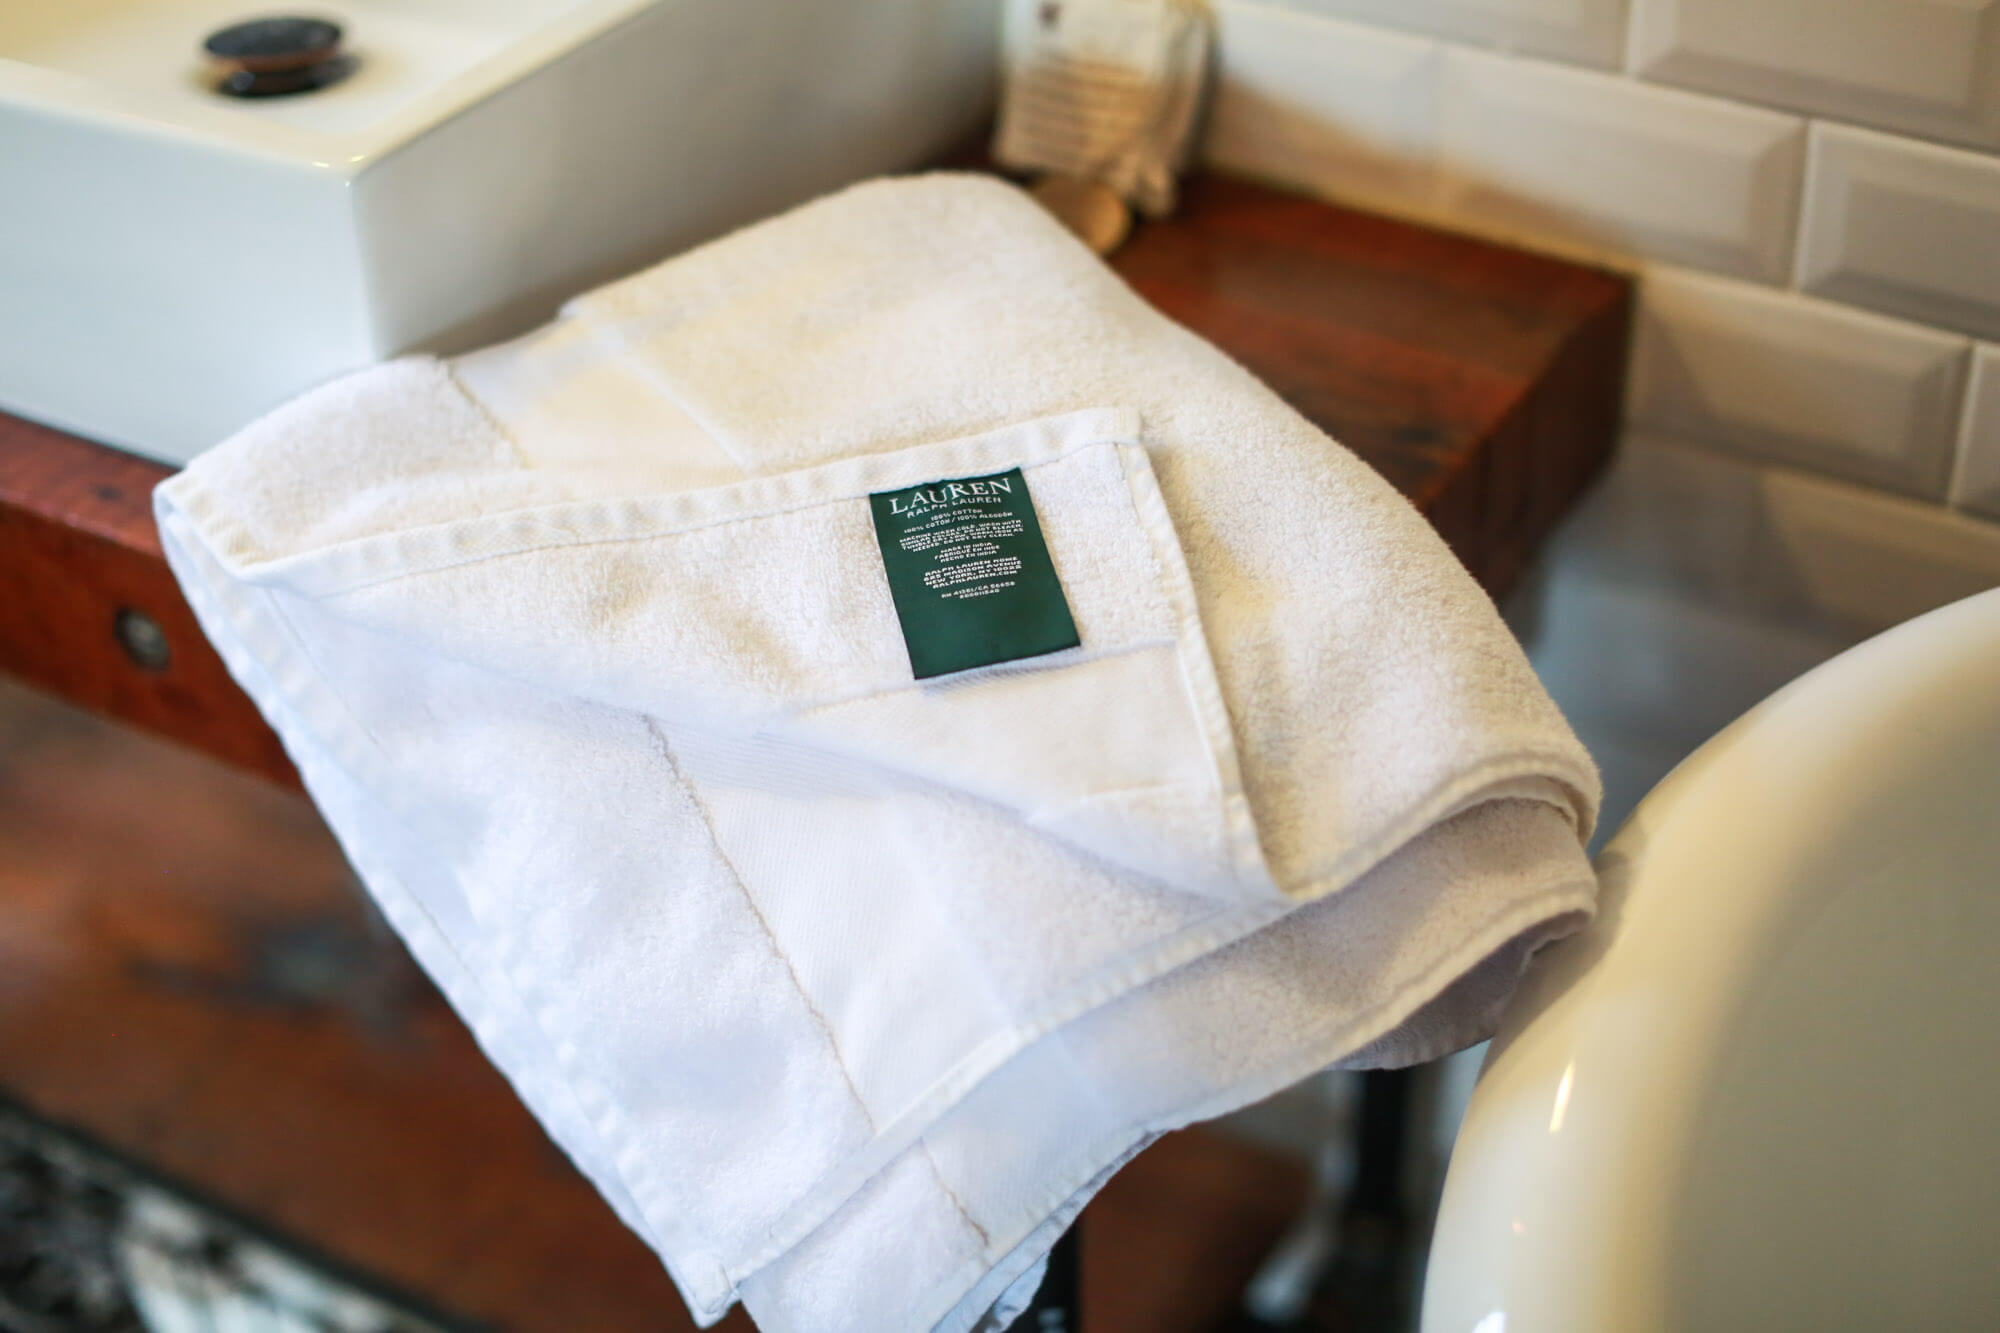 Superior 900 GSM Super Absorbent All-Cotton 2-Piece Bath Towel Set